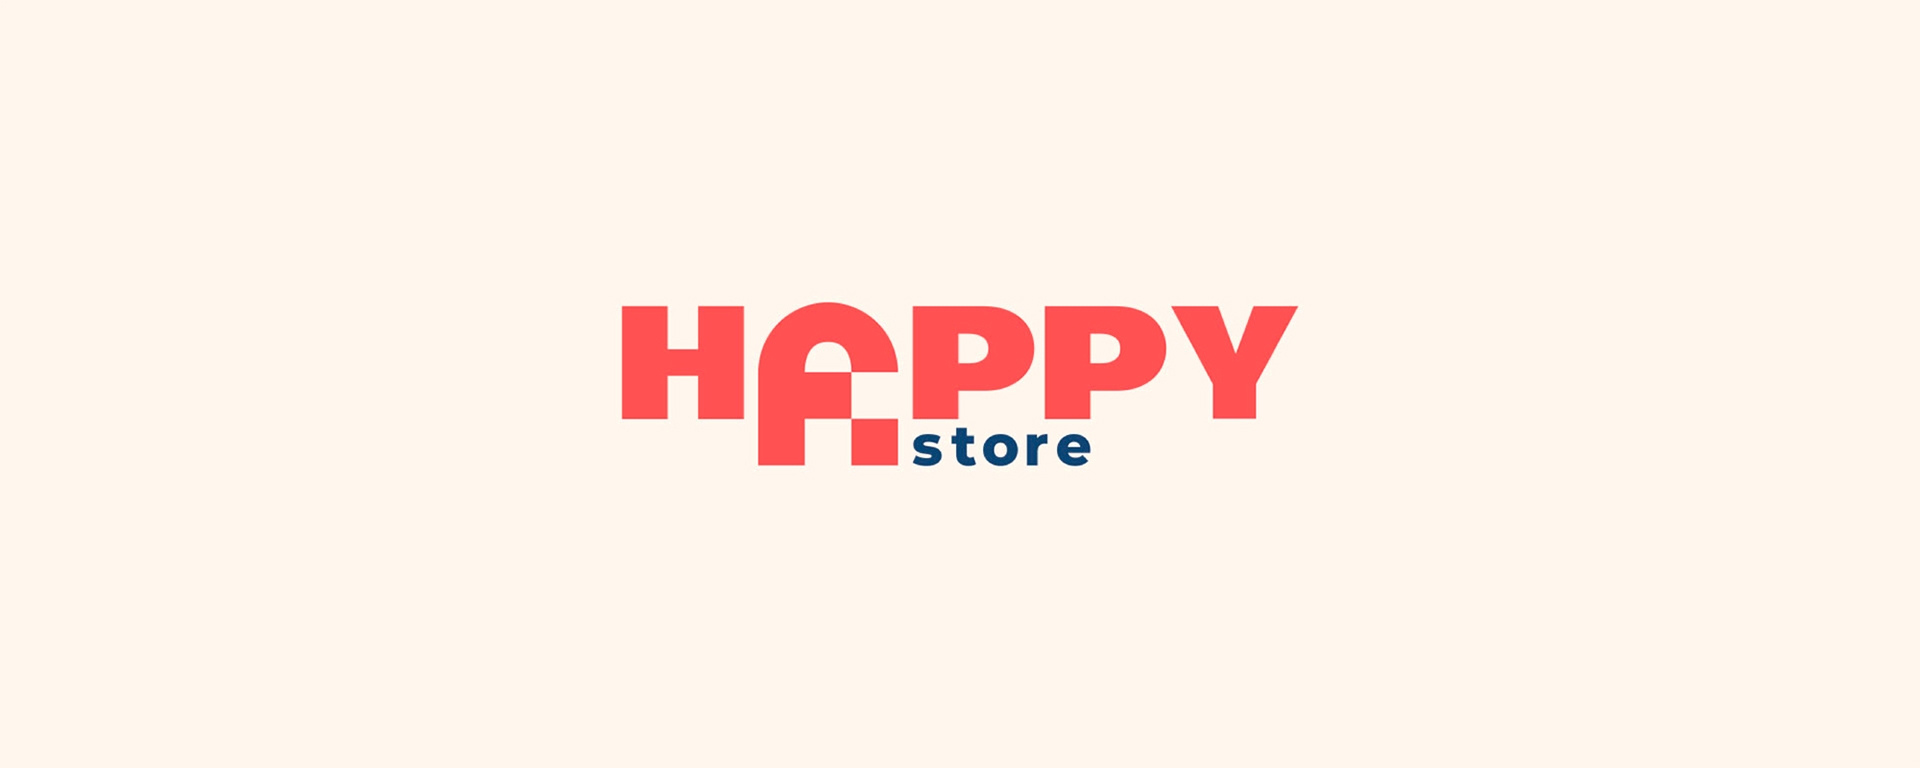 Концепция брендинга Happy Store